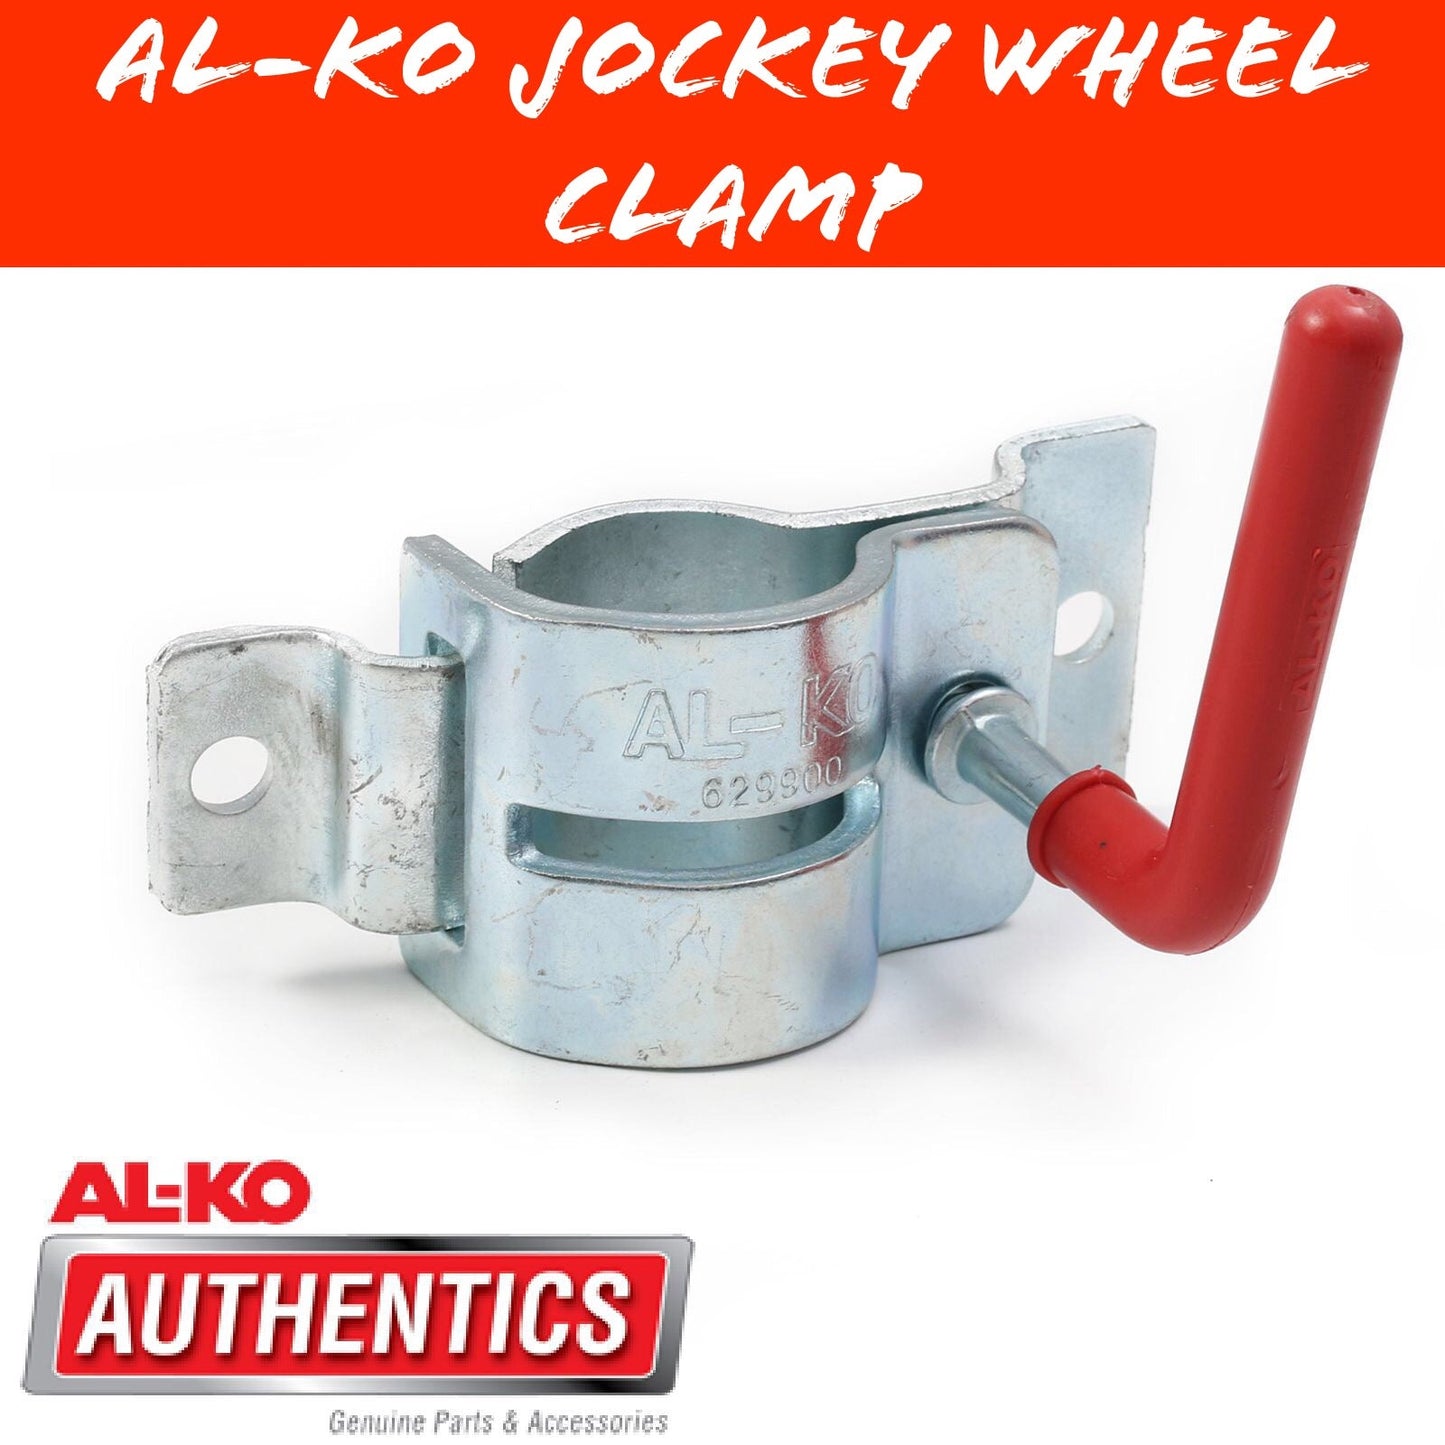 AL-KO Jockey Wheel Clamp